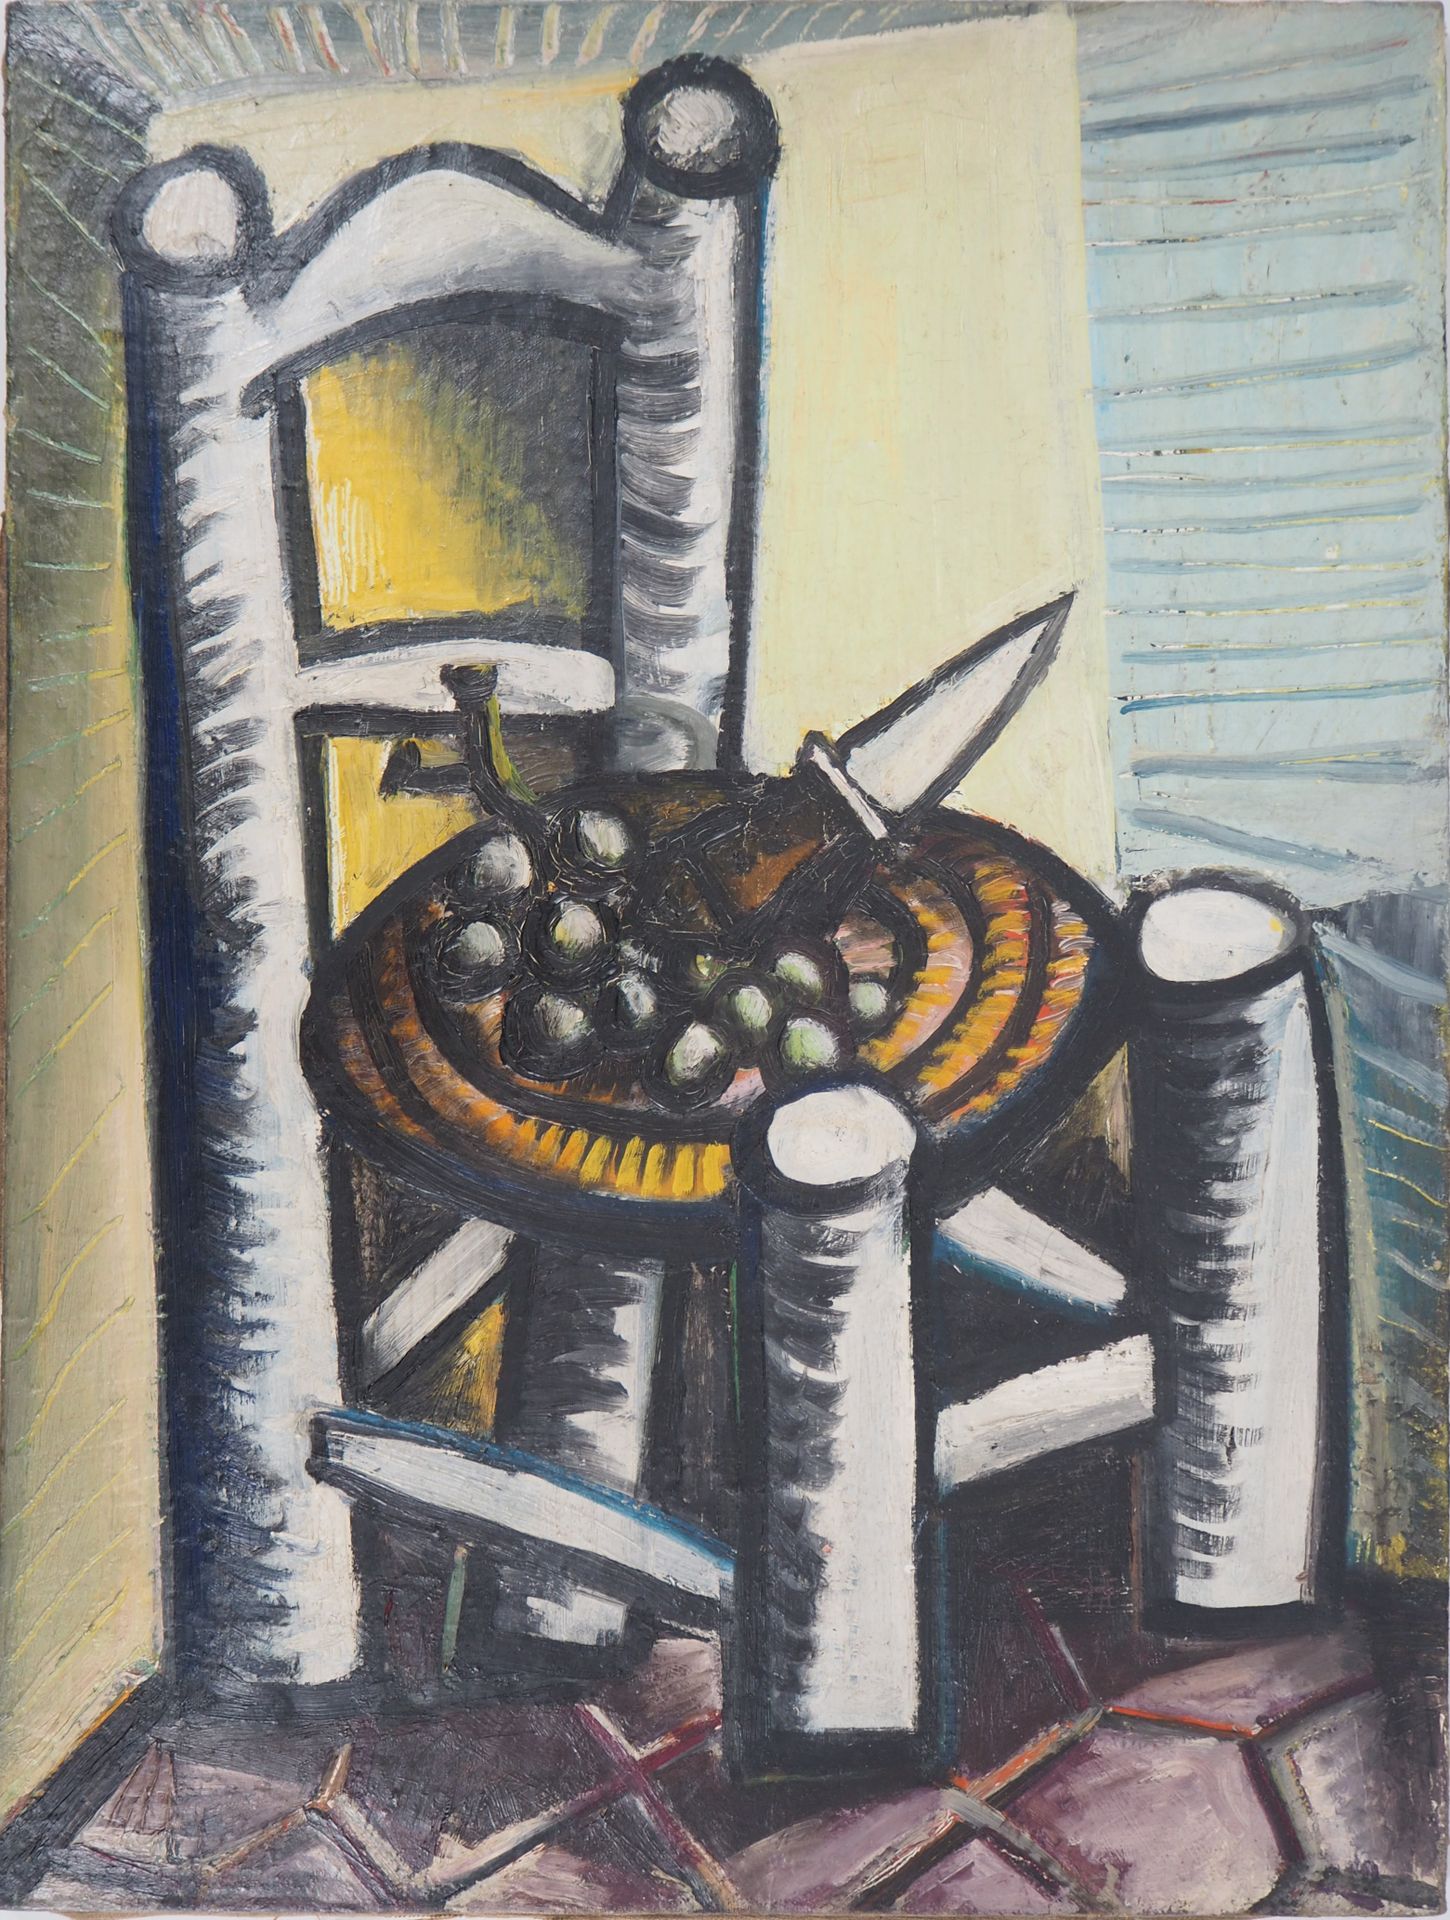 Carlos CARNERO Carlos CARNERO (1922-1980)

Hommage à Picasso : Chaise cubiste

H&hellip;